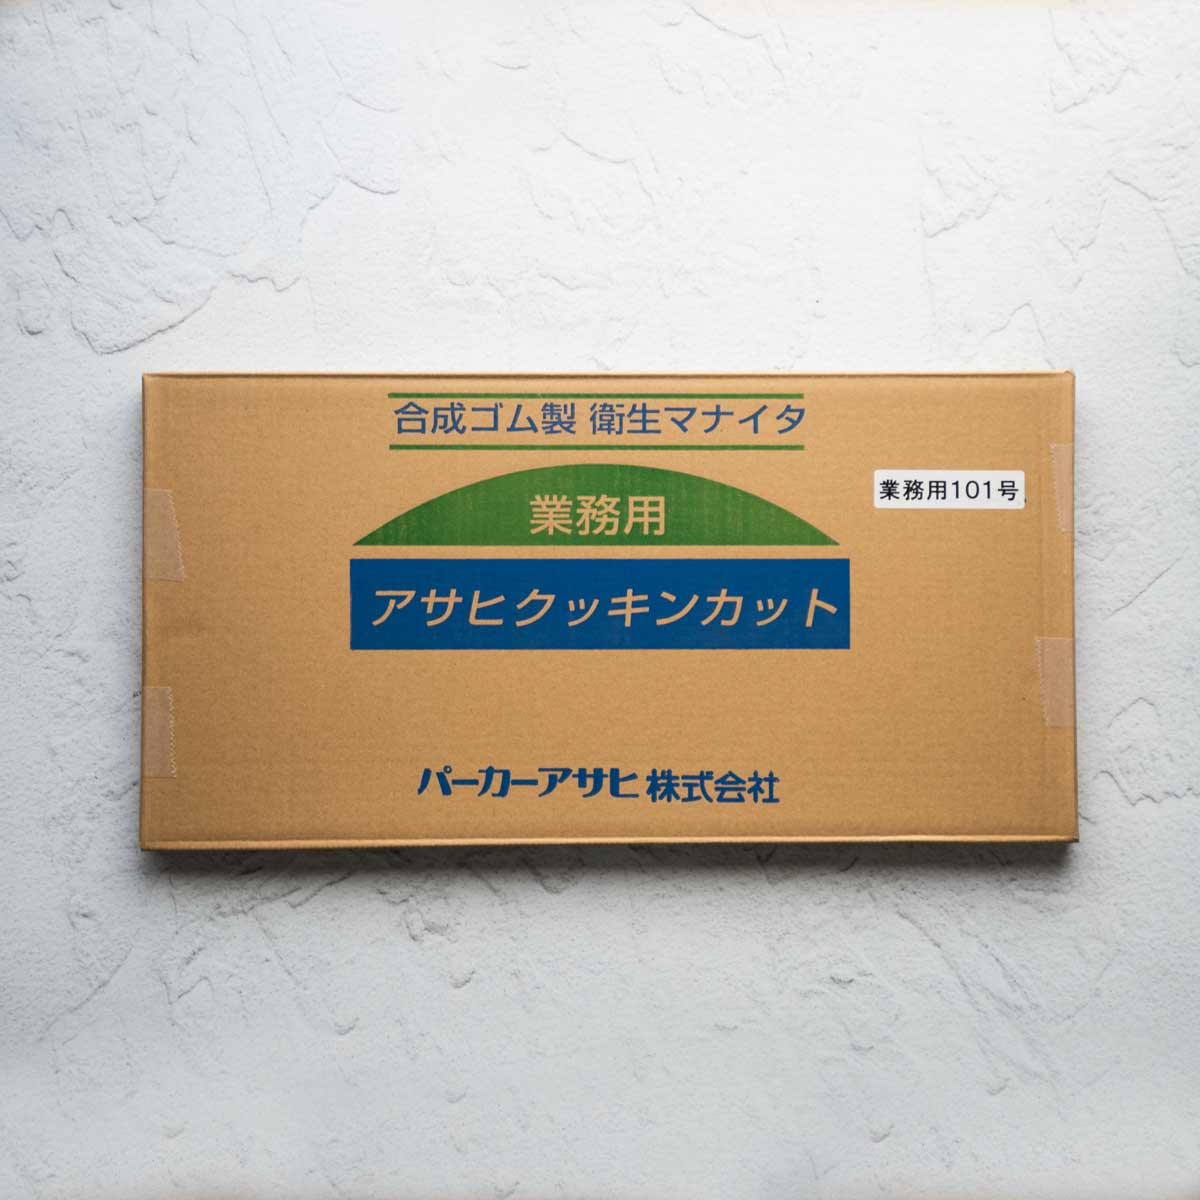 Asahi Professional Synthetic Rubber Cutting Board - 600x330x15